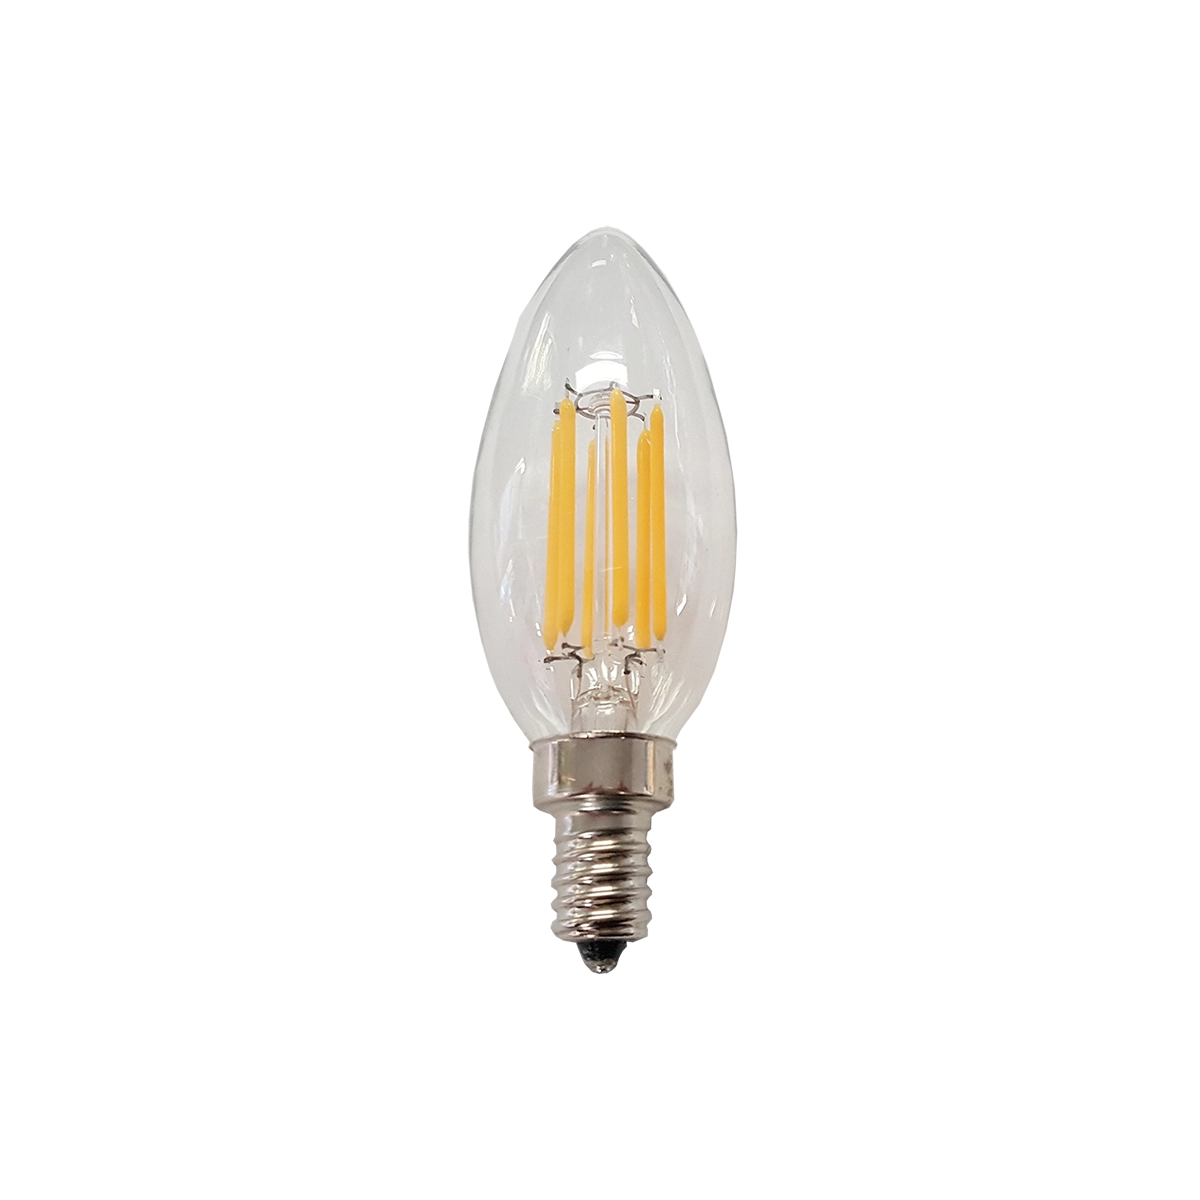 Decorative LED Bulbs